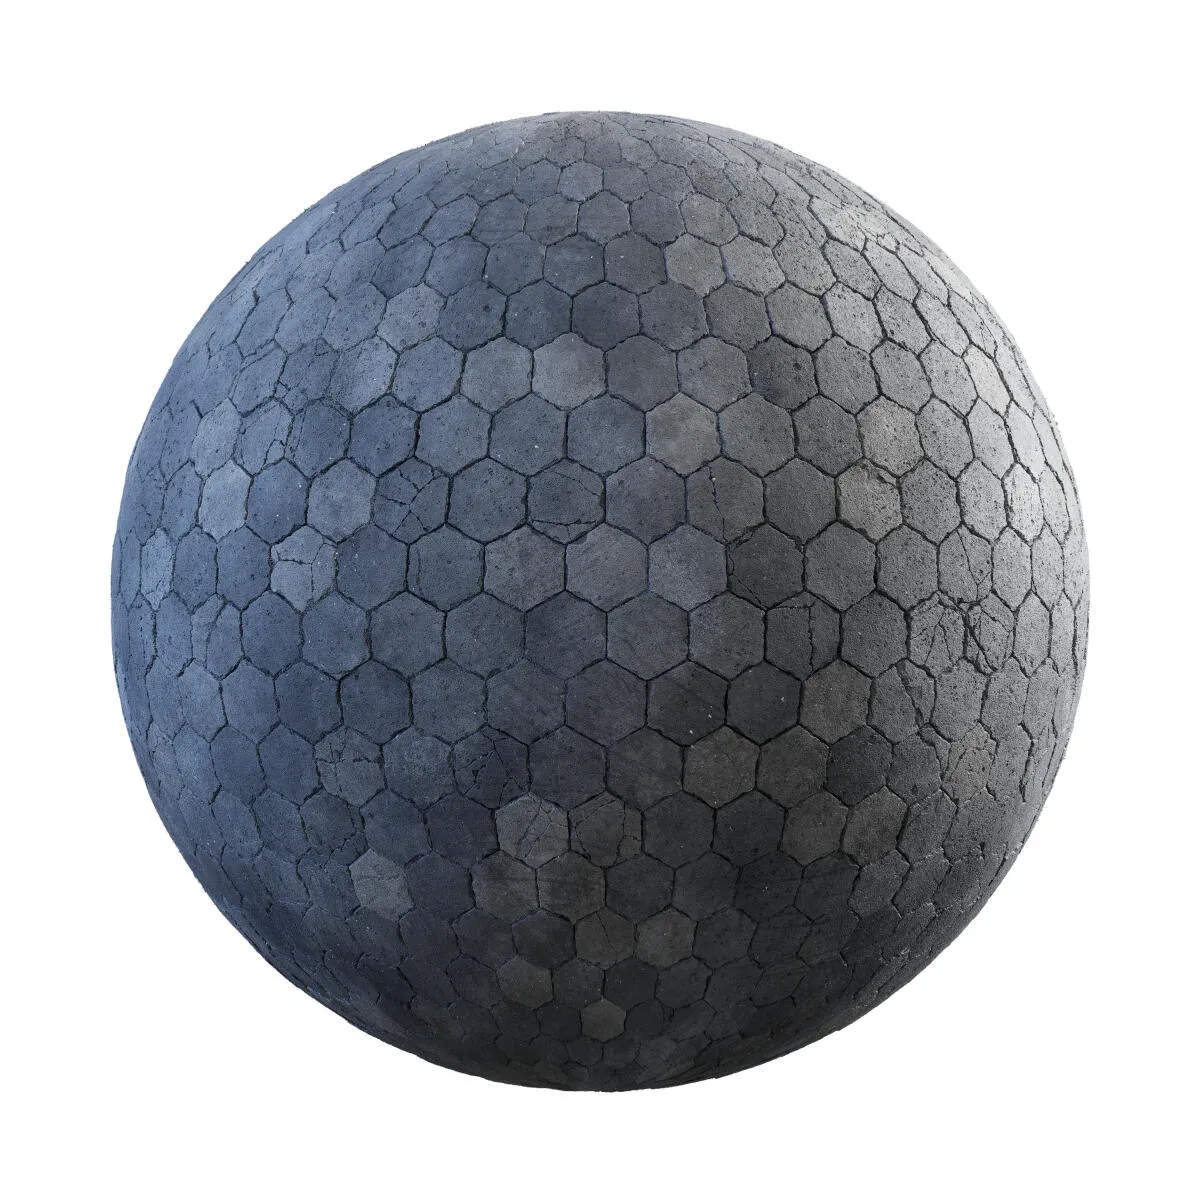 PBR Textures Volume 34 – Pavements – 4K – cracked_grey_hexagon_concrete_pavement_36_27